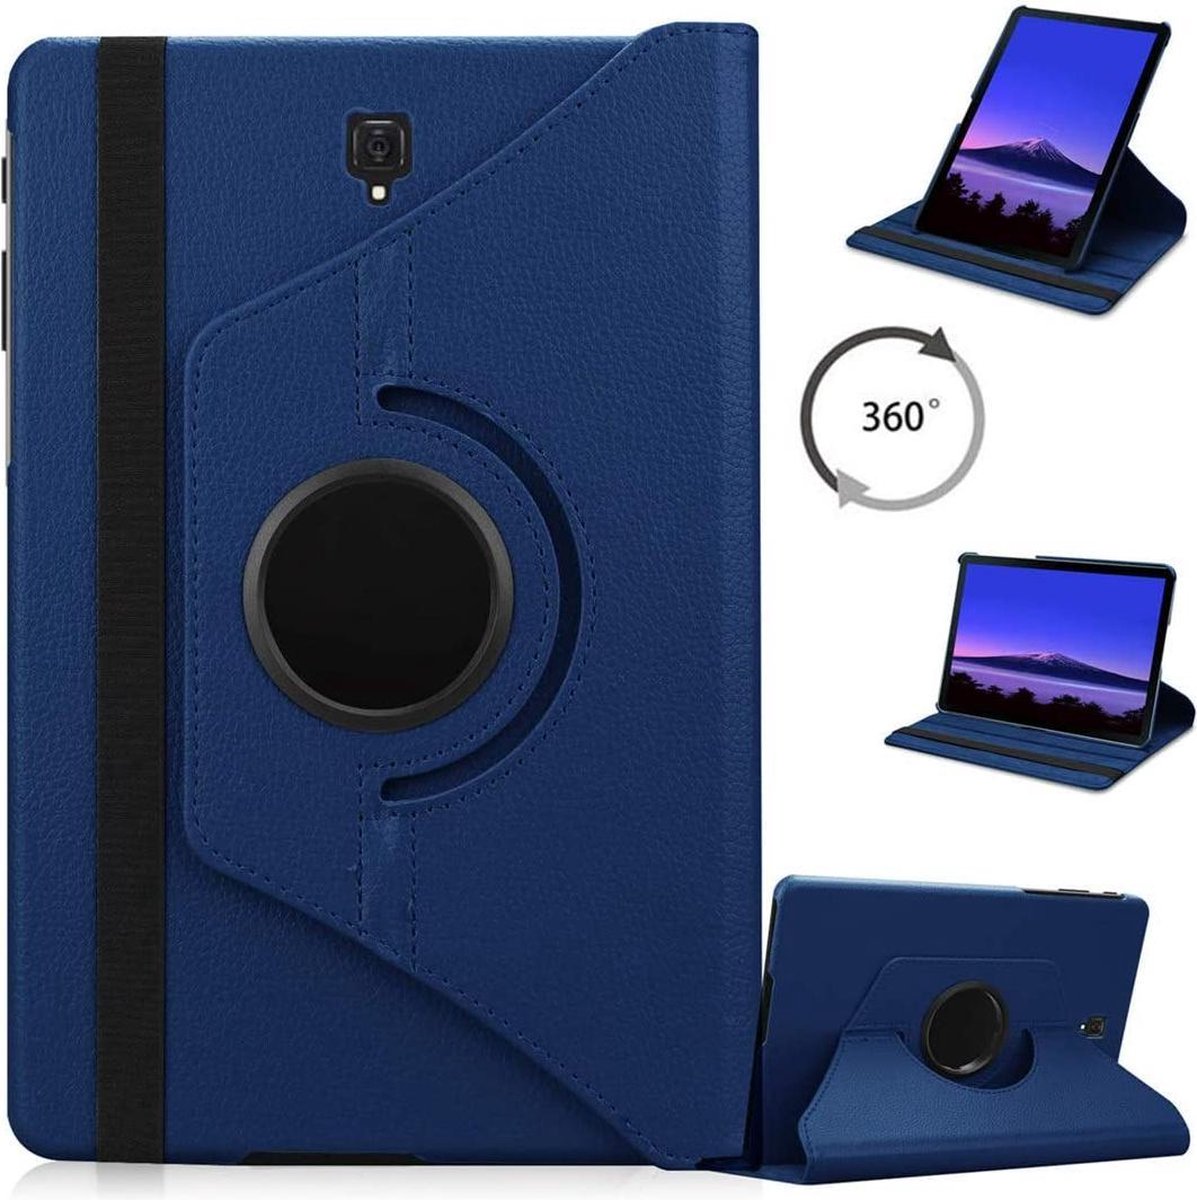 Draaibaar Hoesje - Rotation Tabletcase - Multi stand Case Geschikt voor: Samsung Galaxy Tab S4 10.5 inch T830/T835 (2019) - donker blauw